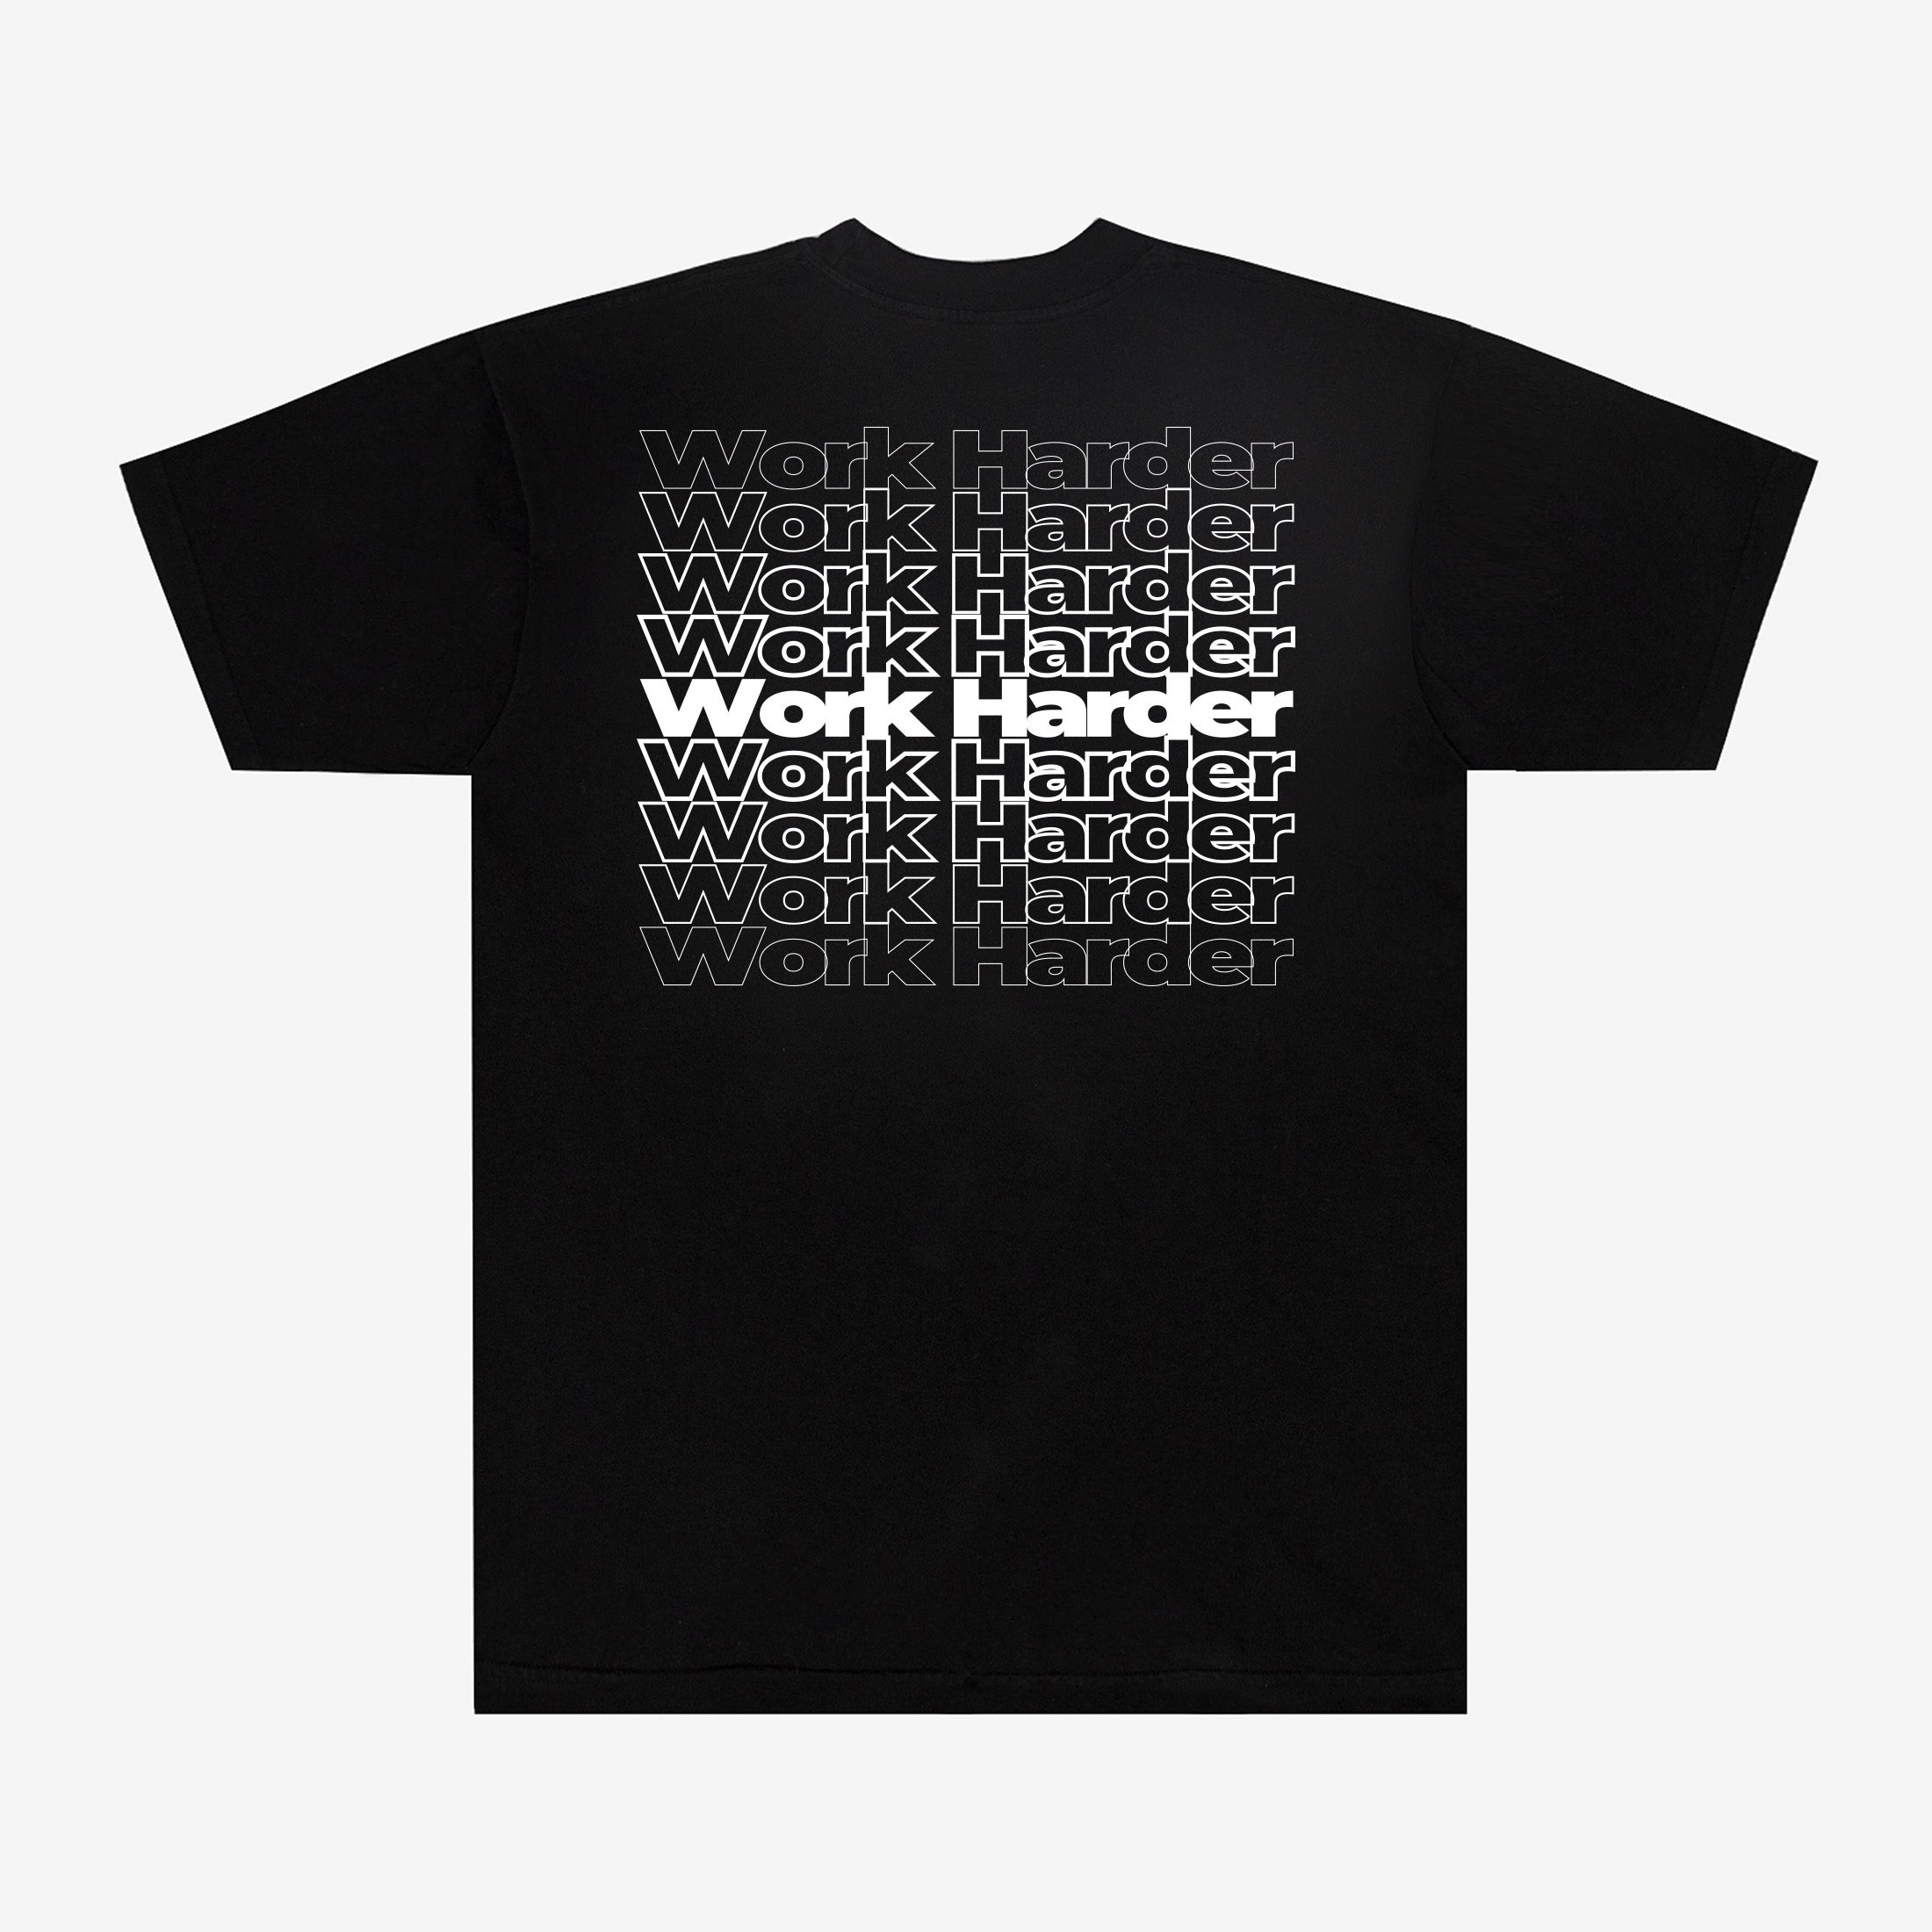 Work harder shirt